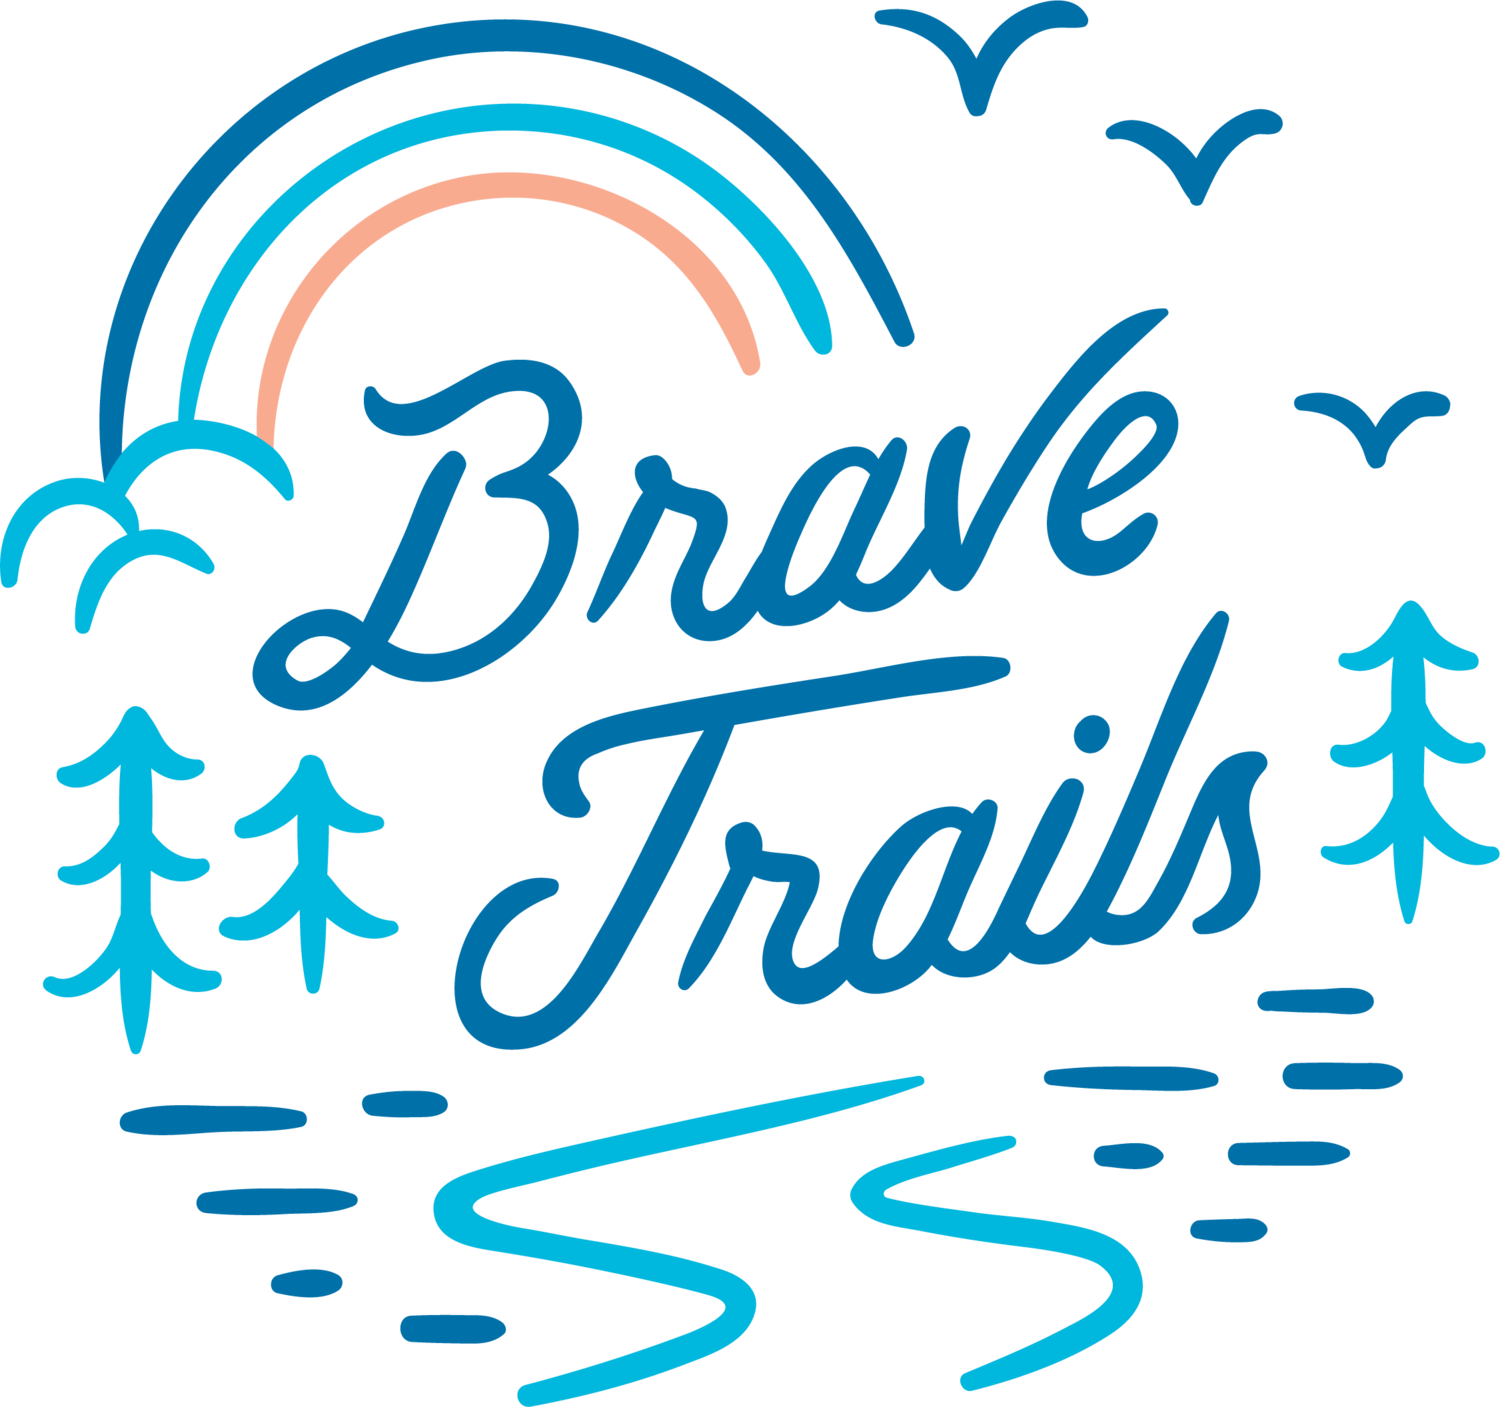 Brave Trails